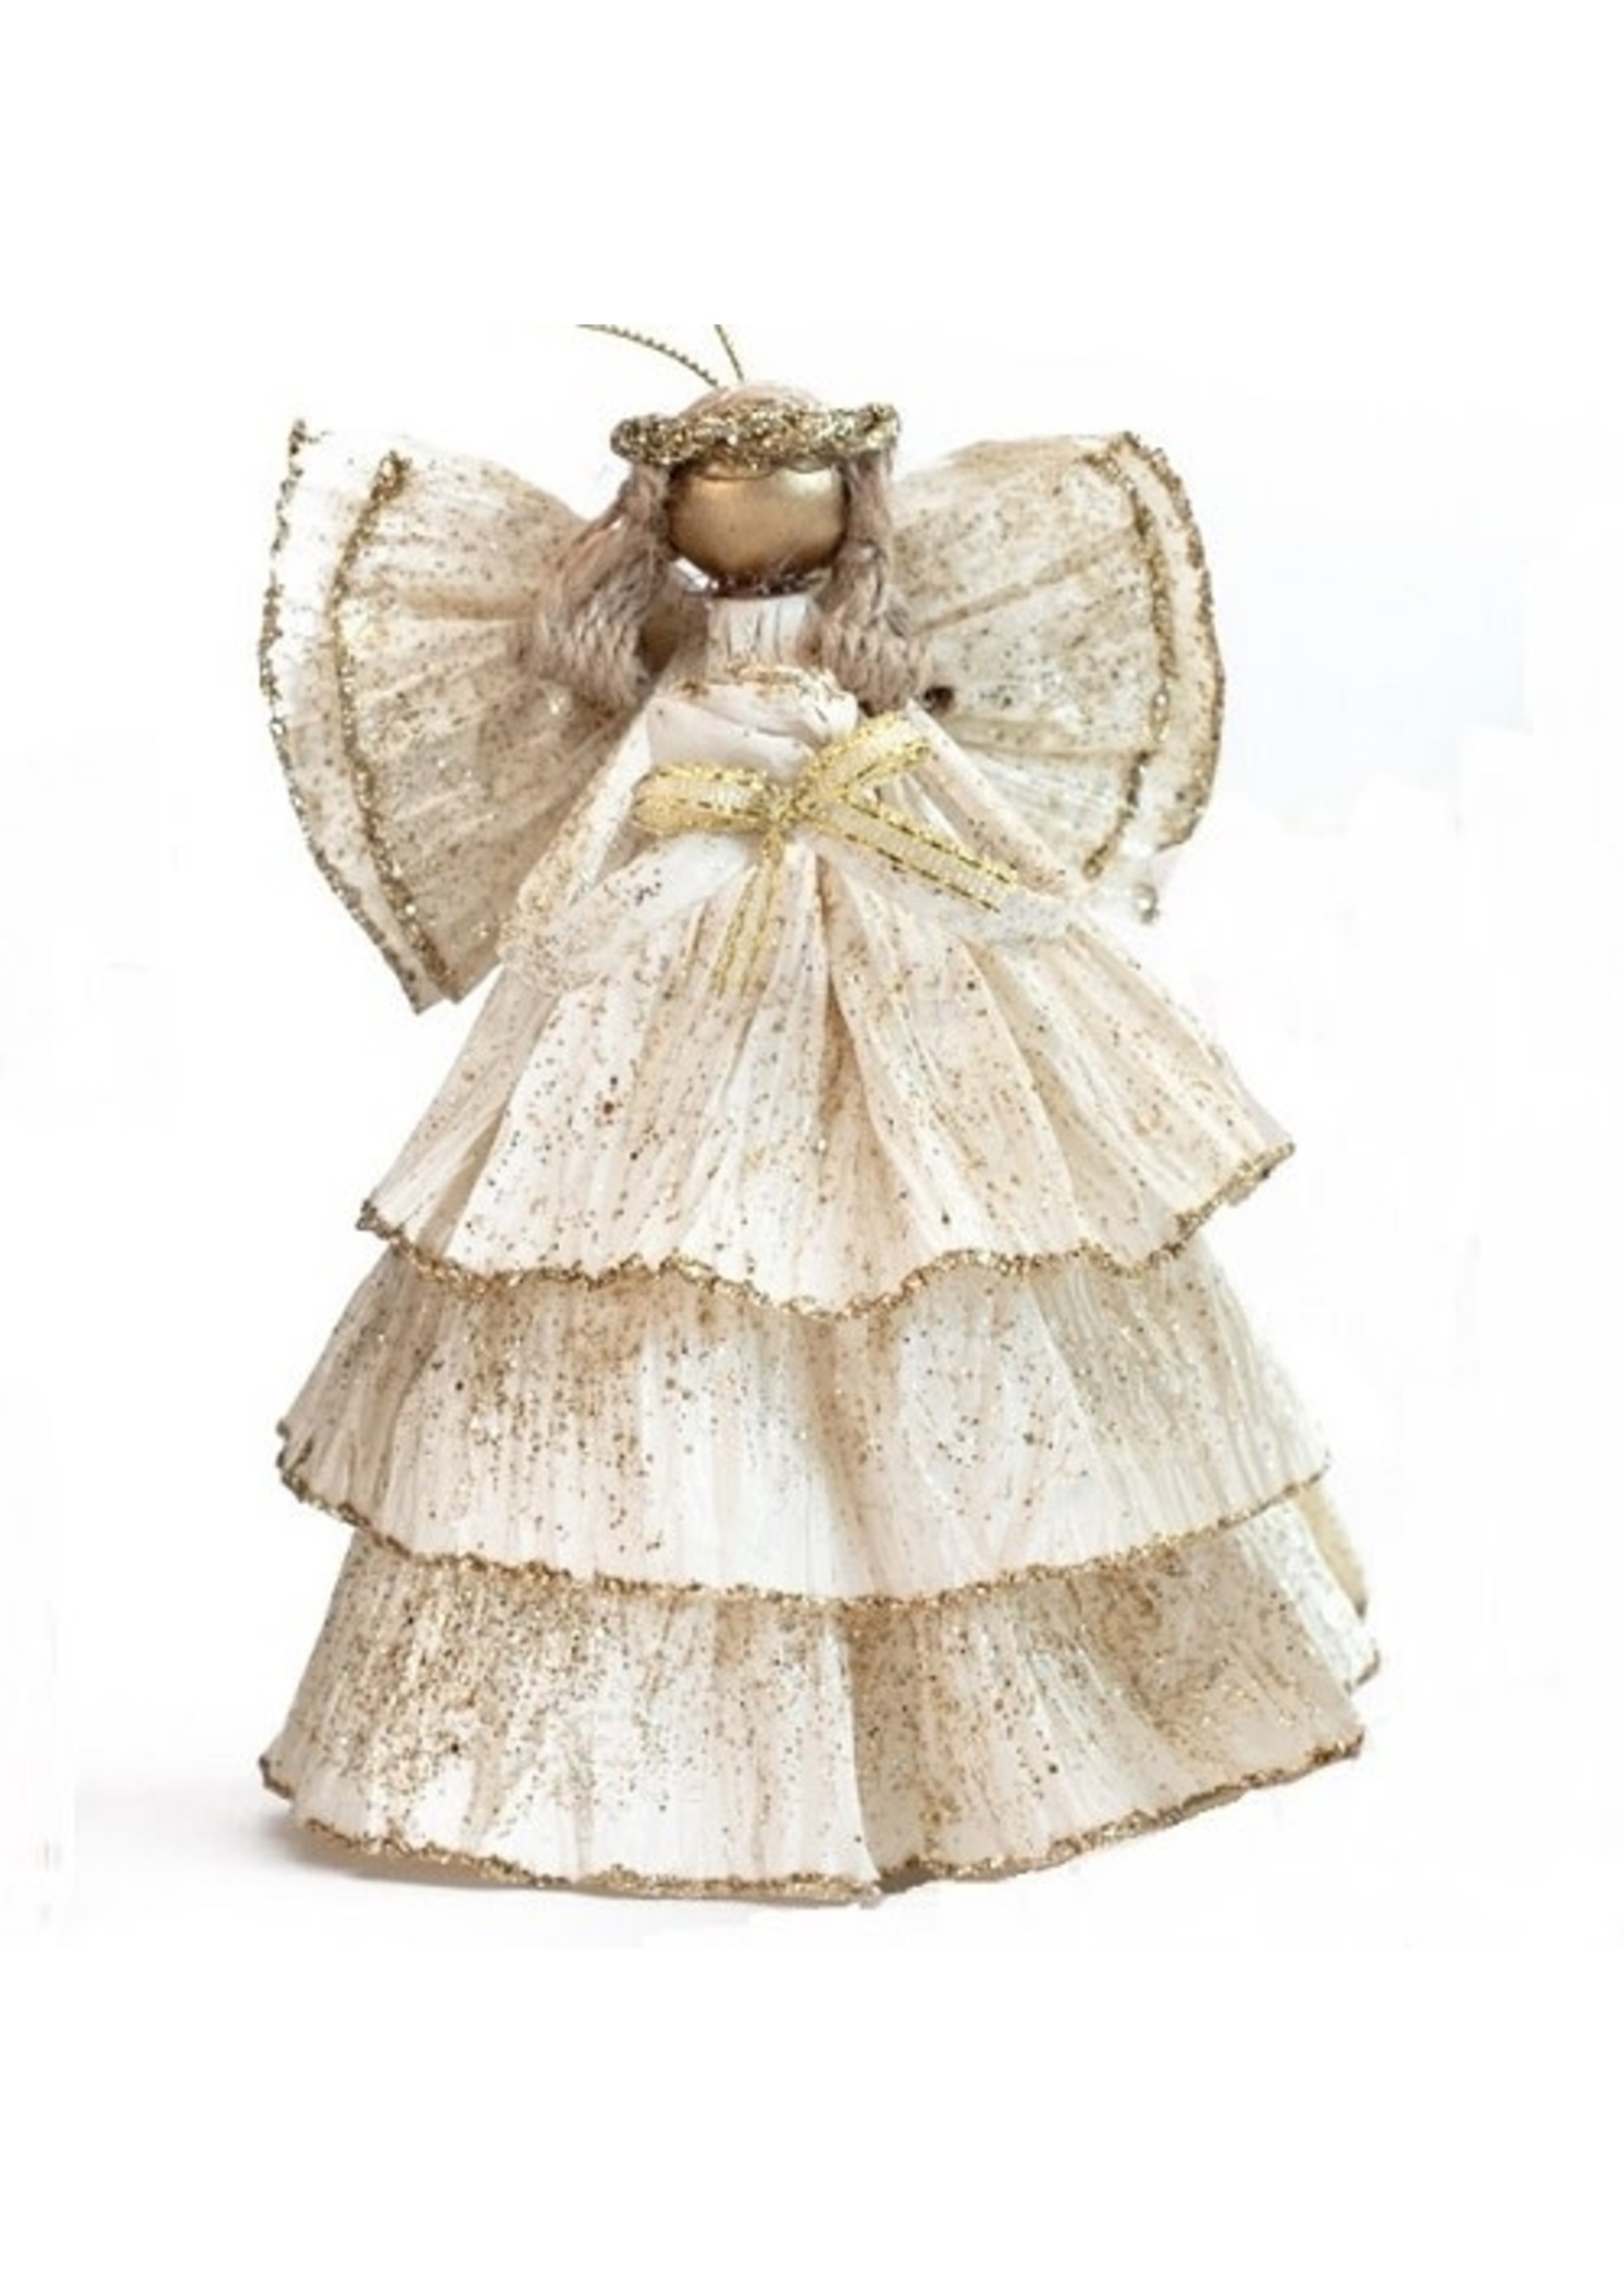 Ornament - Angel - Twine with Ballerina Skirt 5"